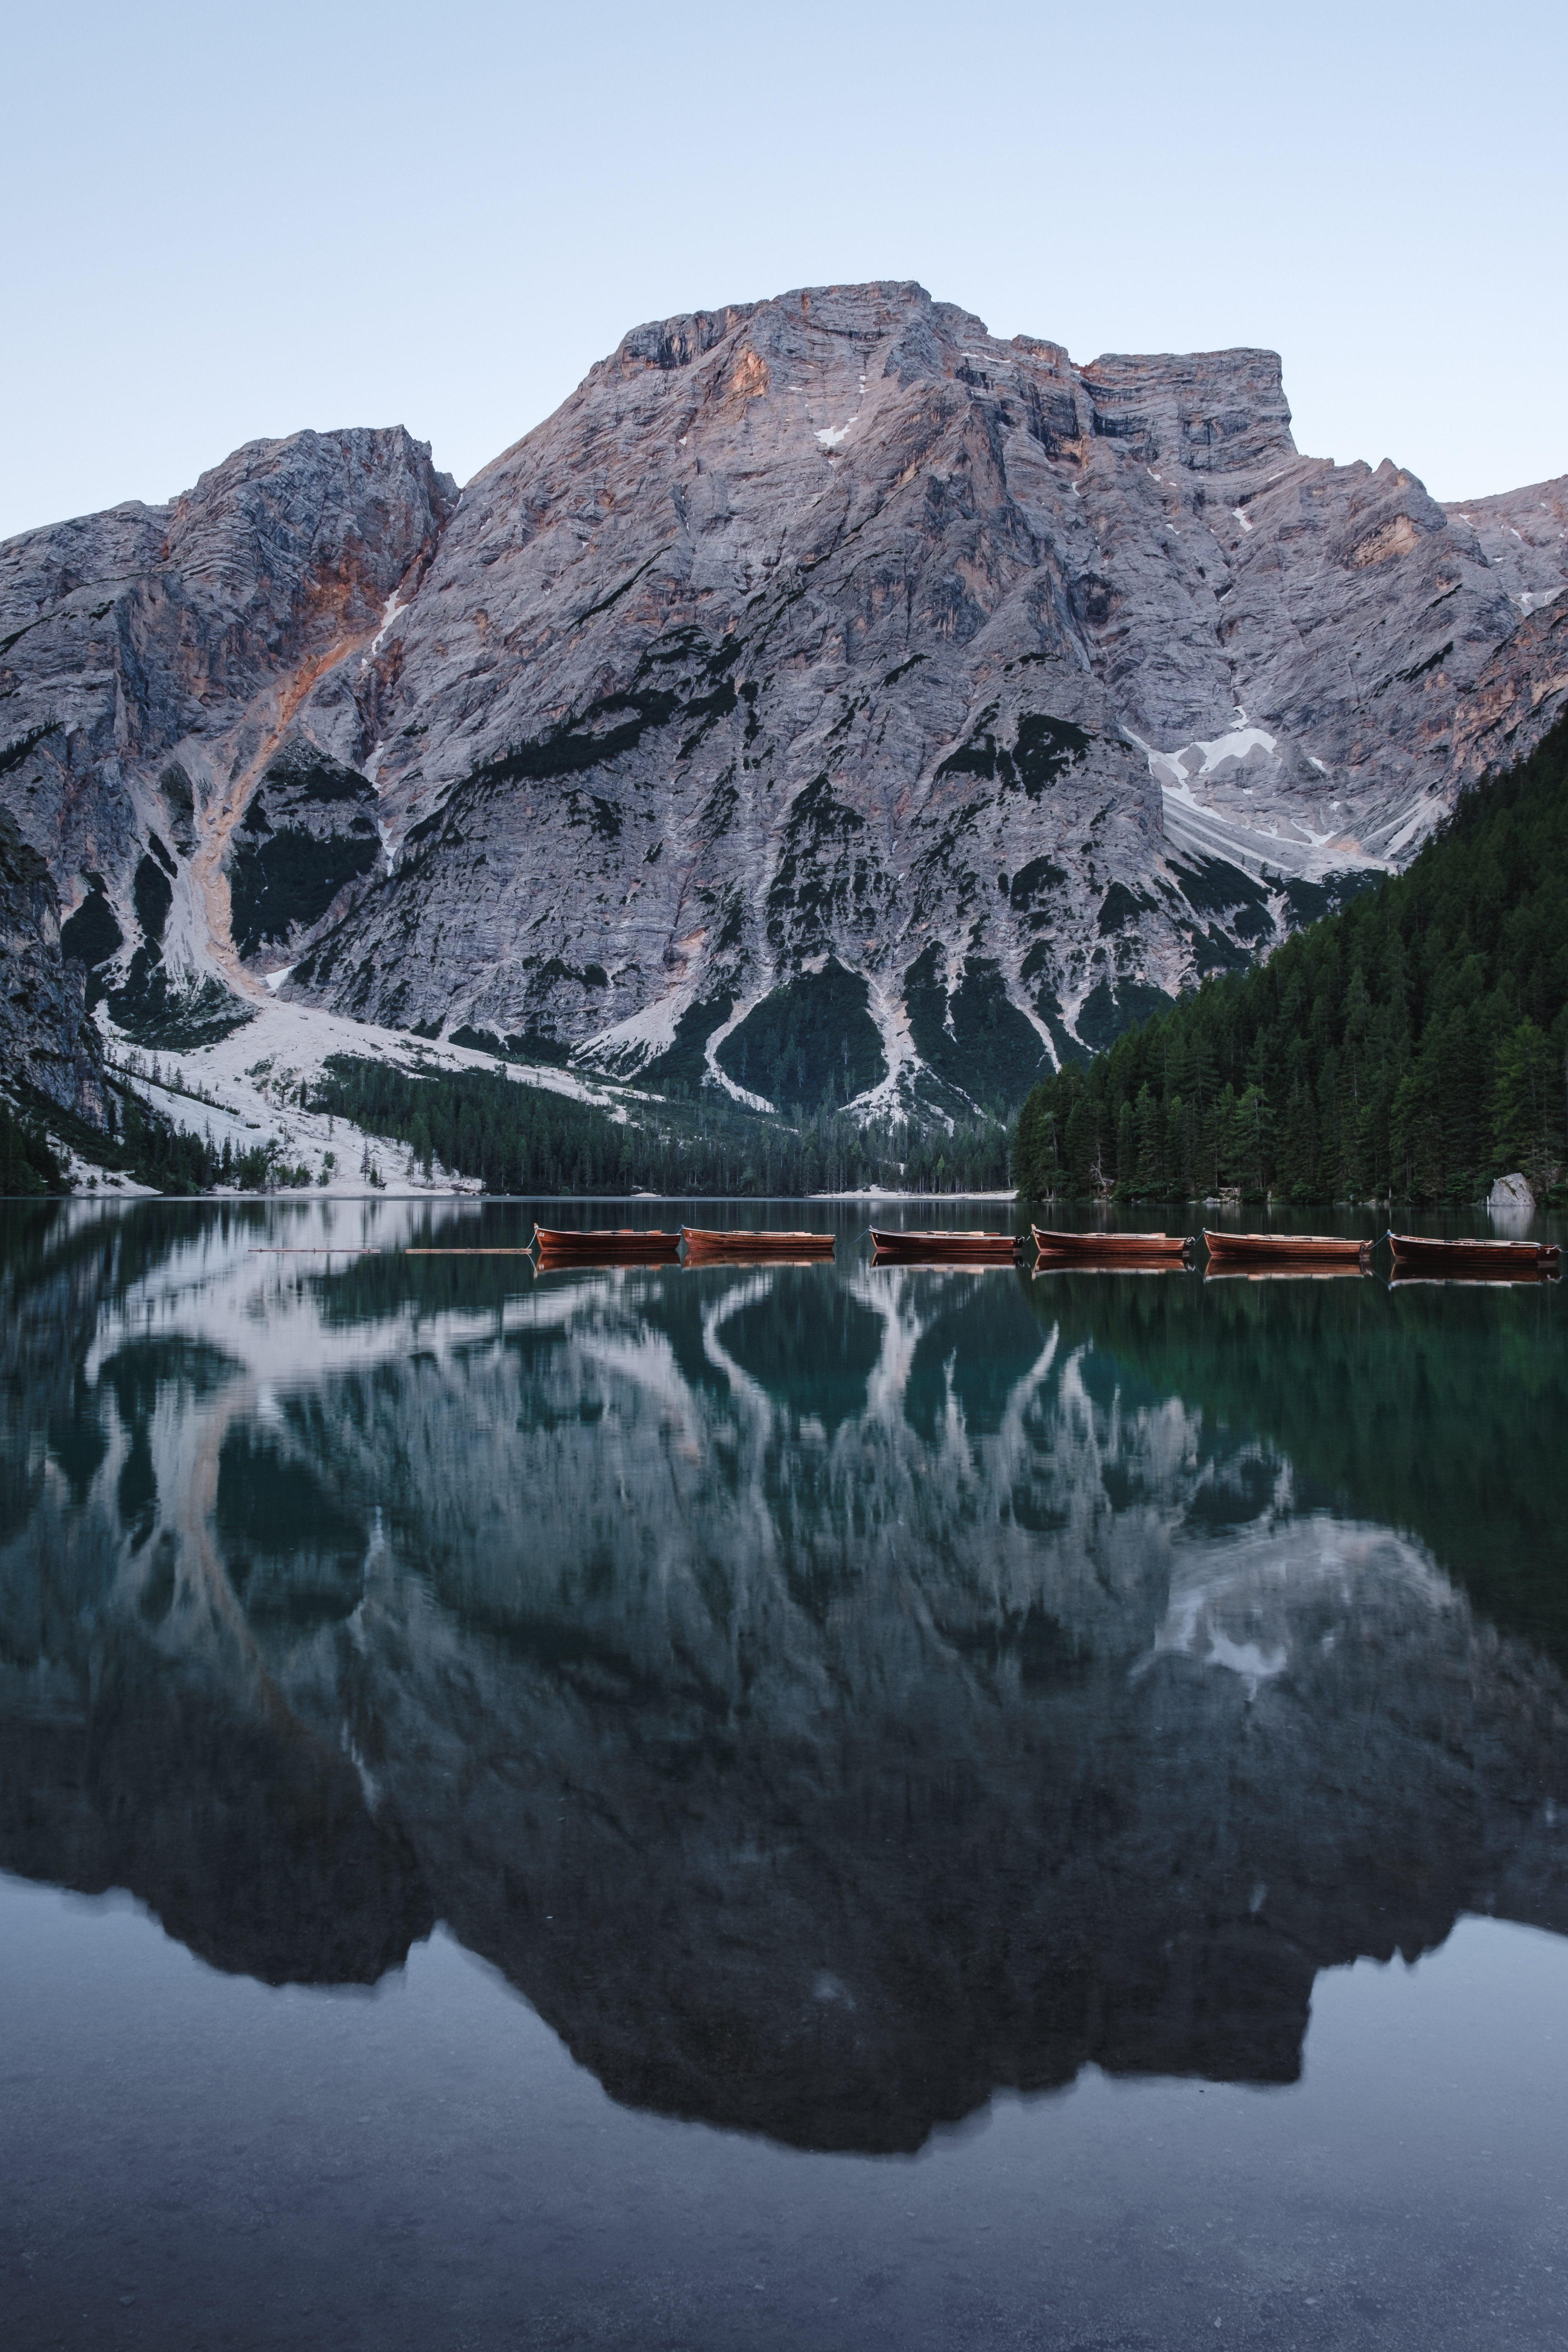 Descarga gratis la imagen Naturaleza, Agua, Montañas, Lago, Reflexión, Barcos en el escritorio de tu PC